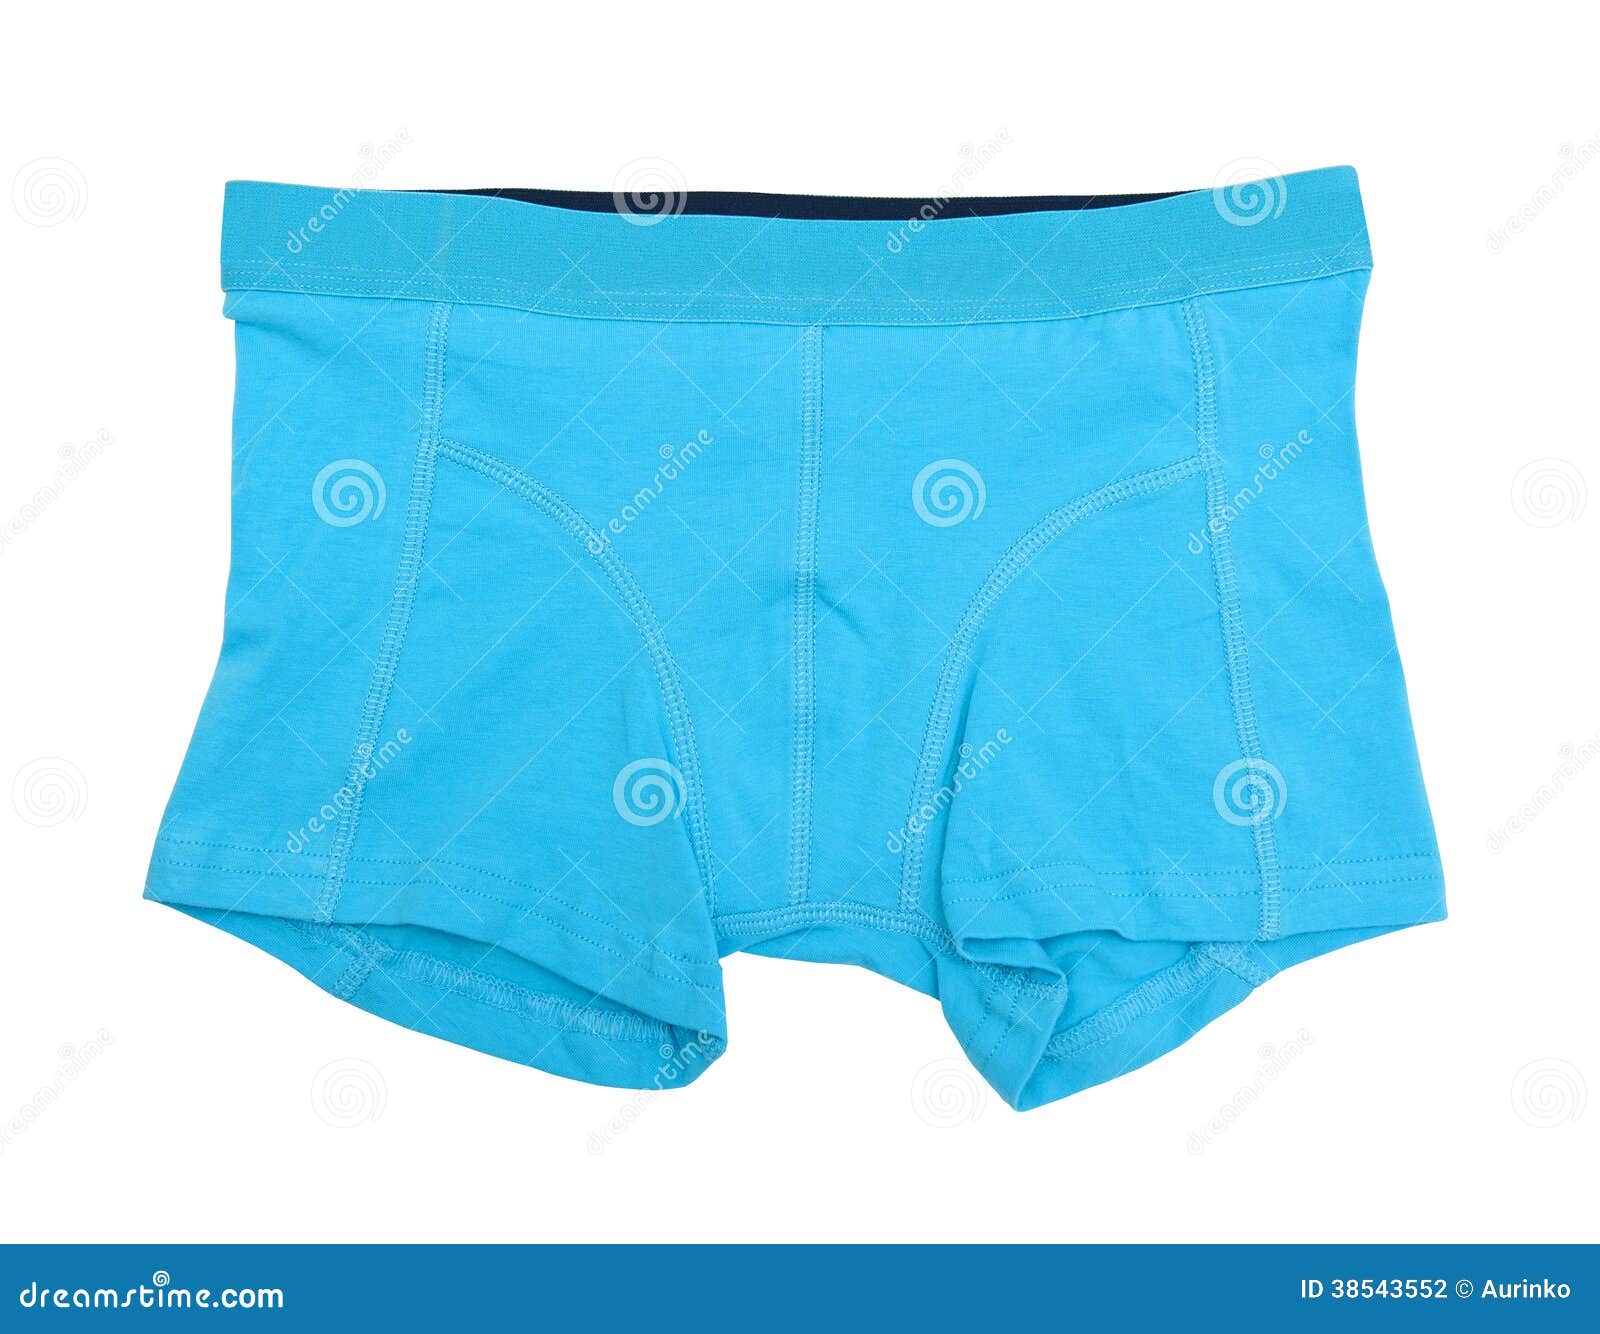 Boxer shorts stock photo. Image of briefs, hygiene, panties - 38543552